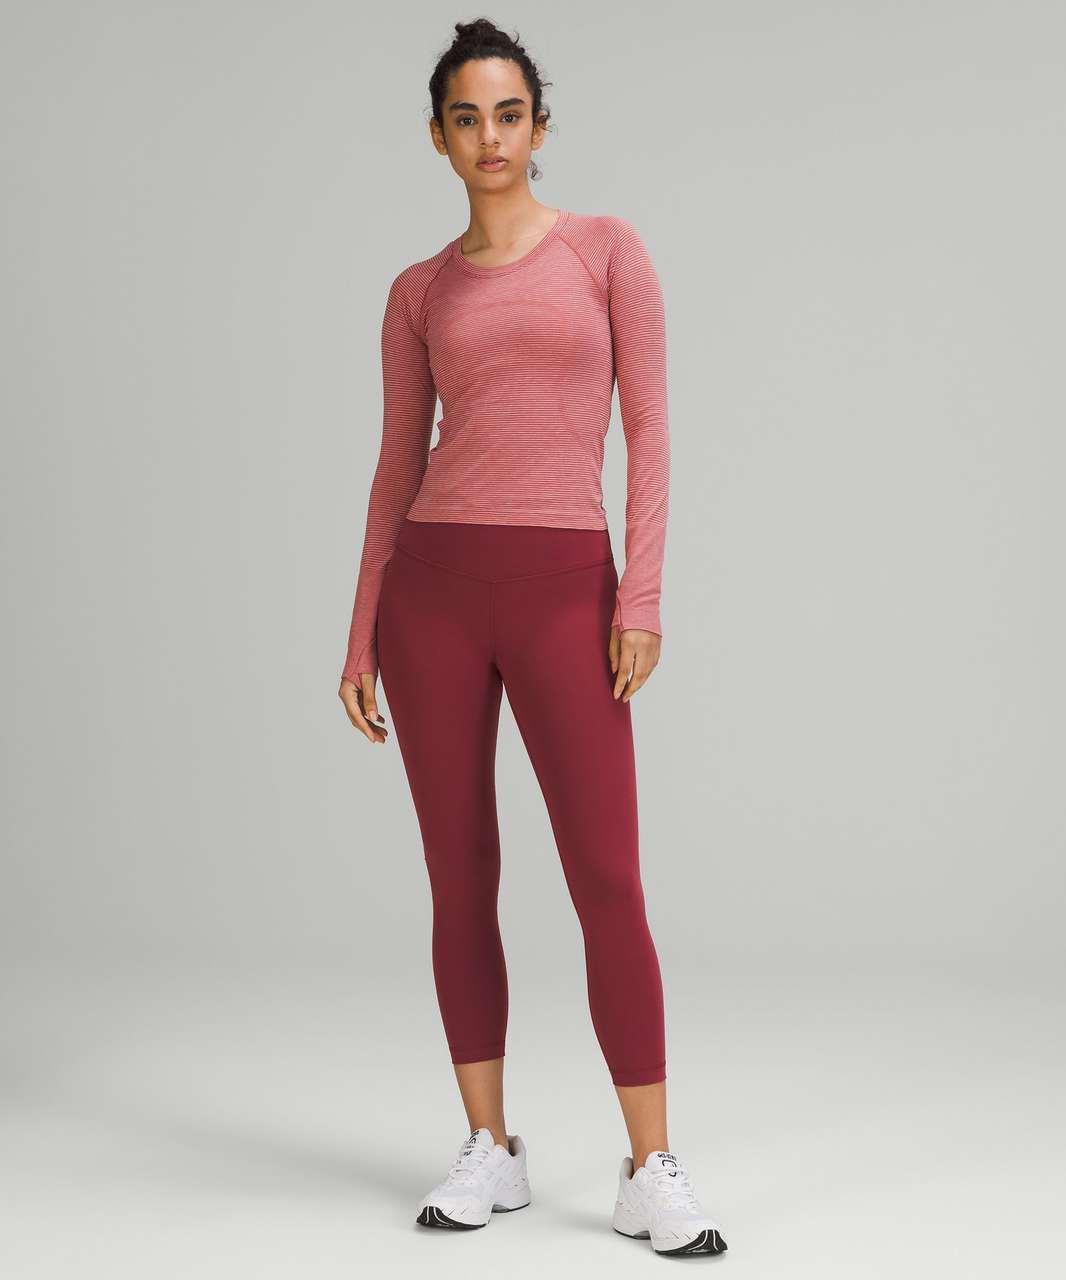 Lululemon Swiftly Tech Long Sleeve Shirt 2.0 *Race Length - Tetra Stripe Pink Savannah / Pink Mist / Mulled Wine / Red Rock